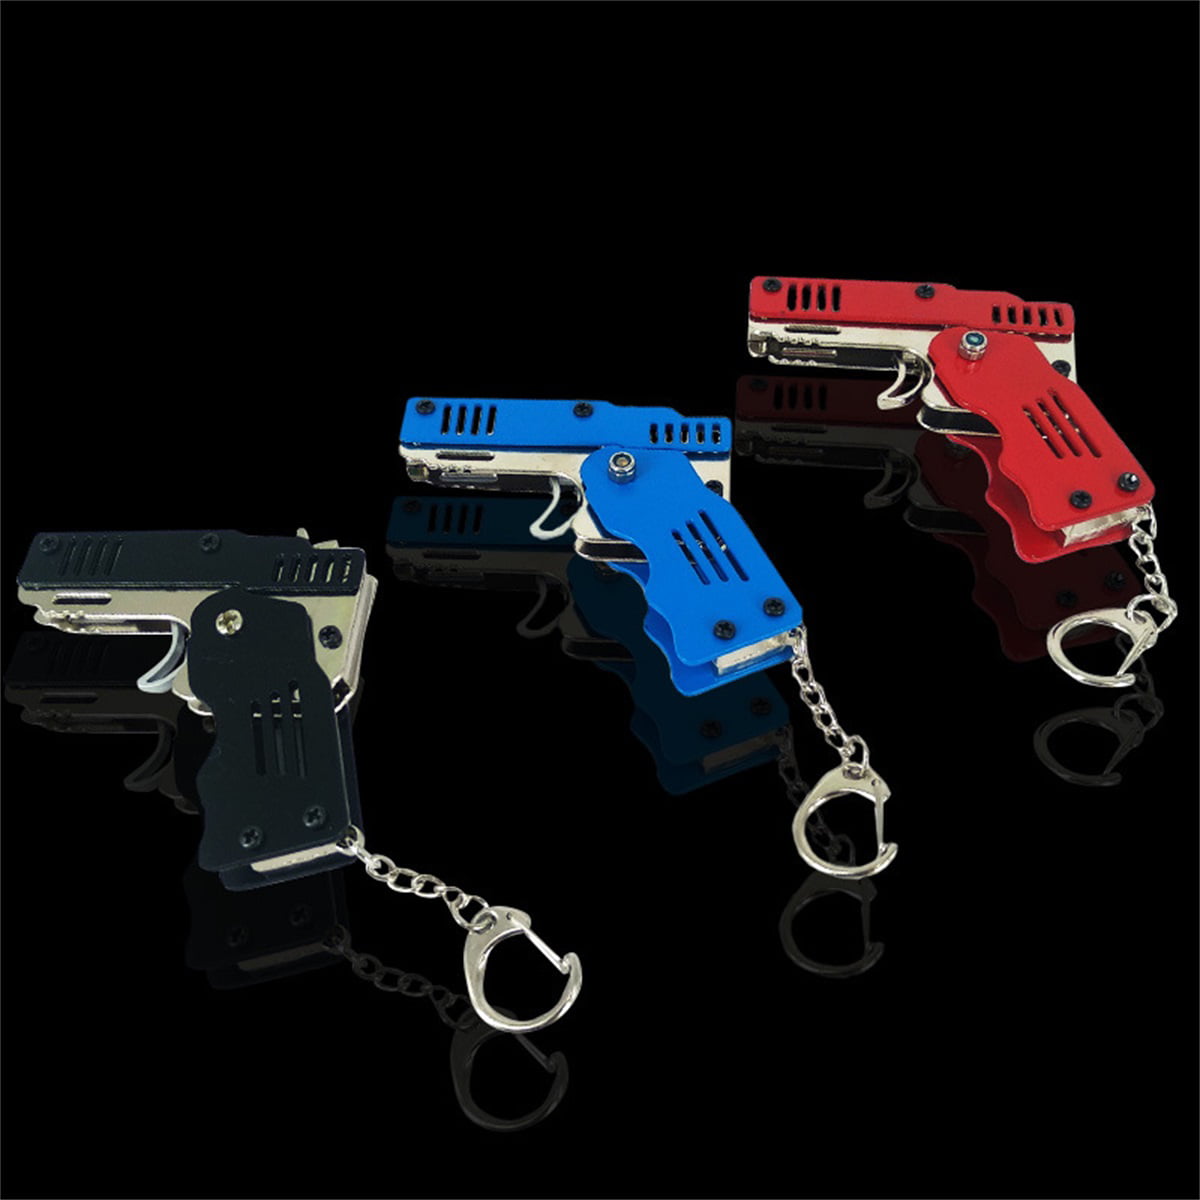 Details about   TRUMARK Snapshot Brand RUBBERBAND Gun 6 Shot Toy Pistol NEW